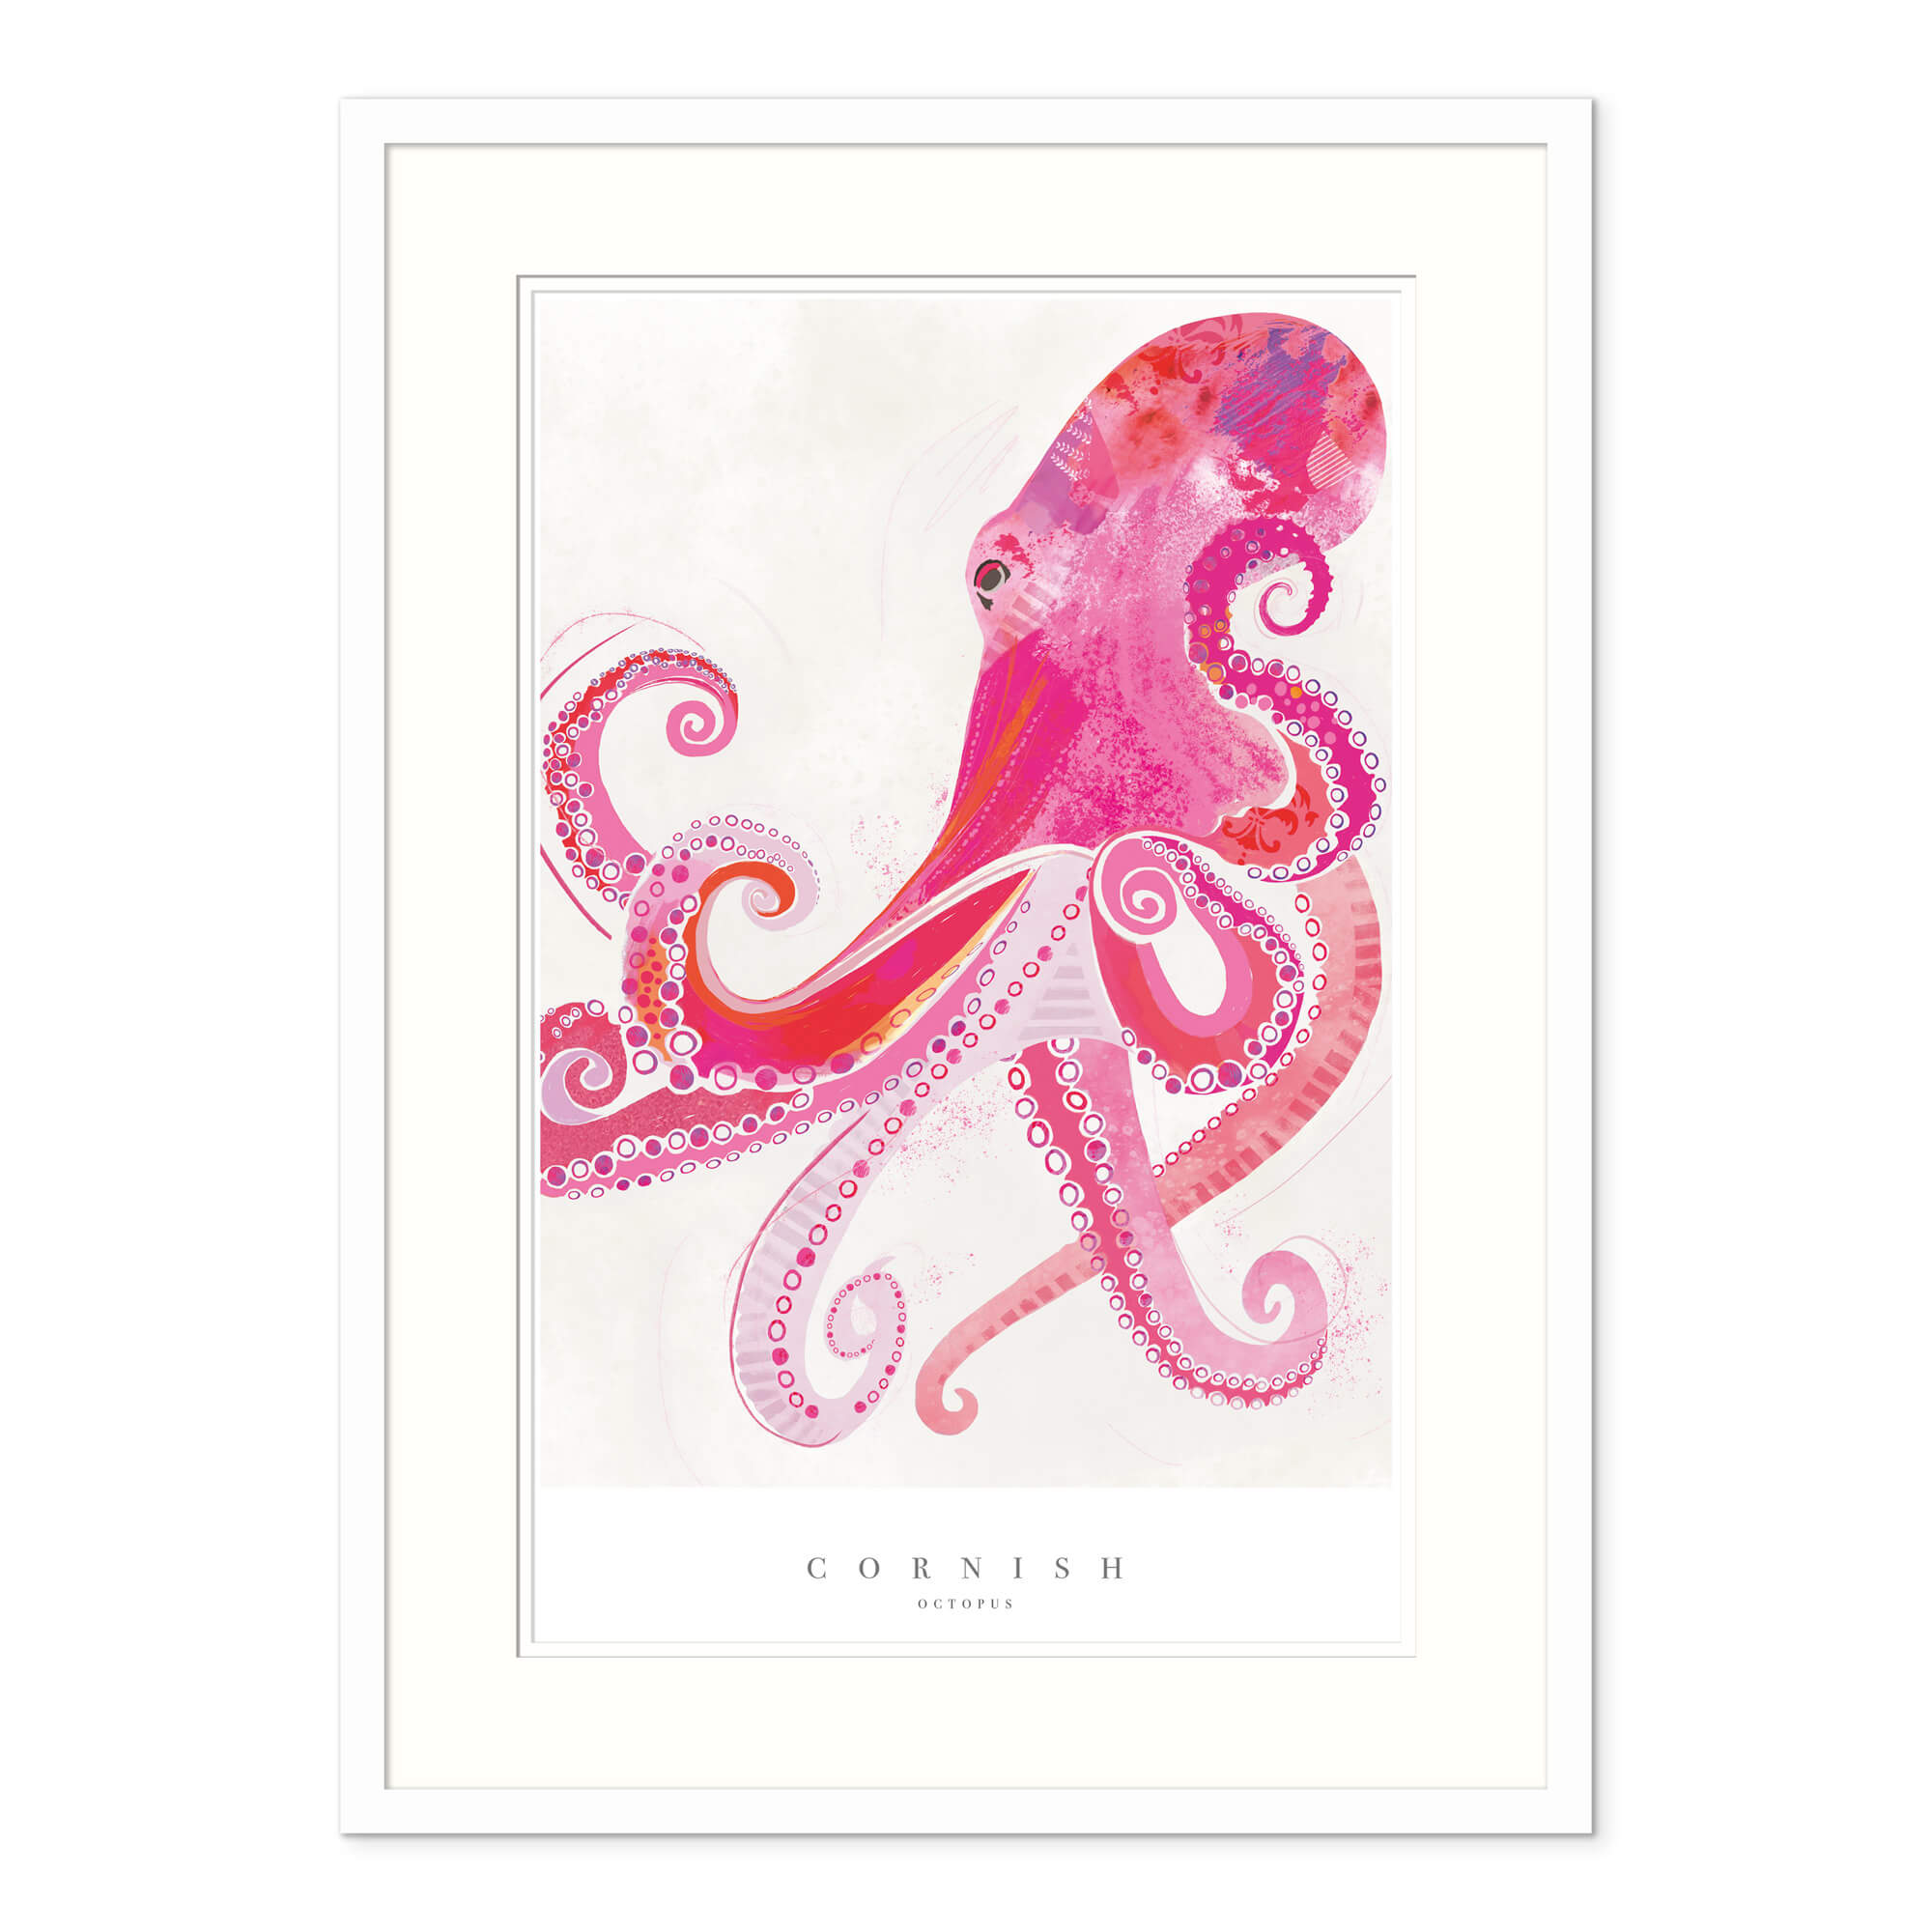 Cornish Octopus Large Framed Print